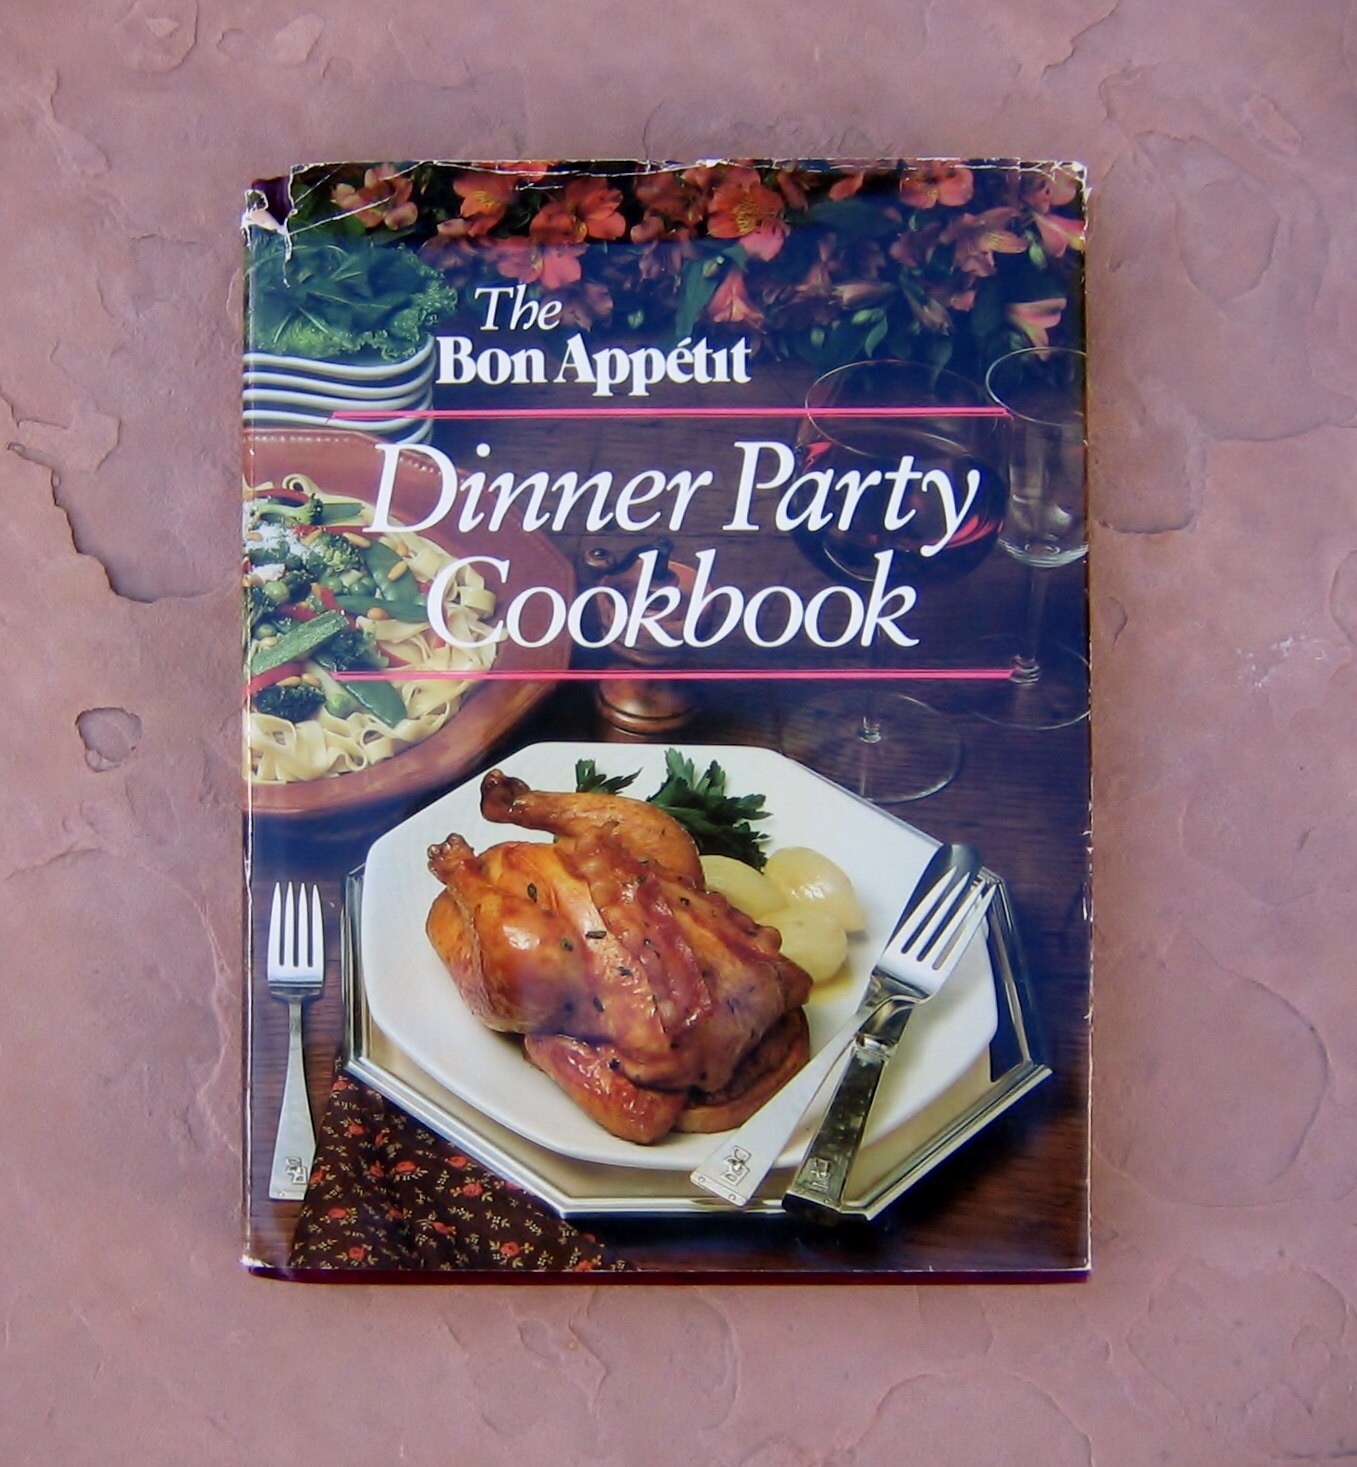 Dinner Party Cookbook The Bon Appetit Dinner Party Cookbook